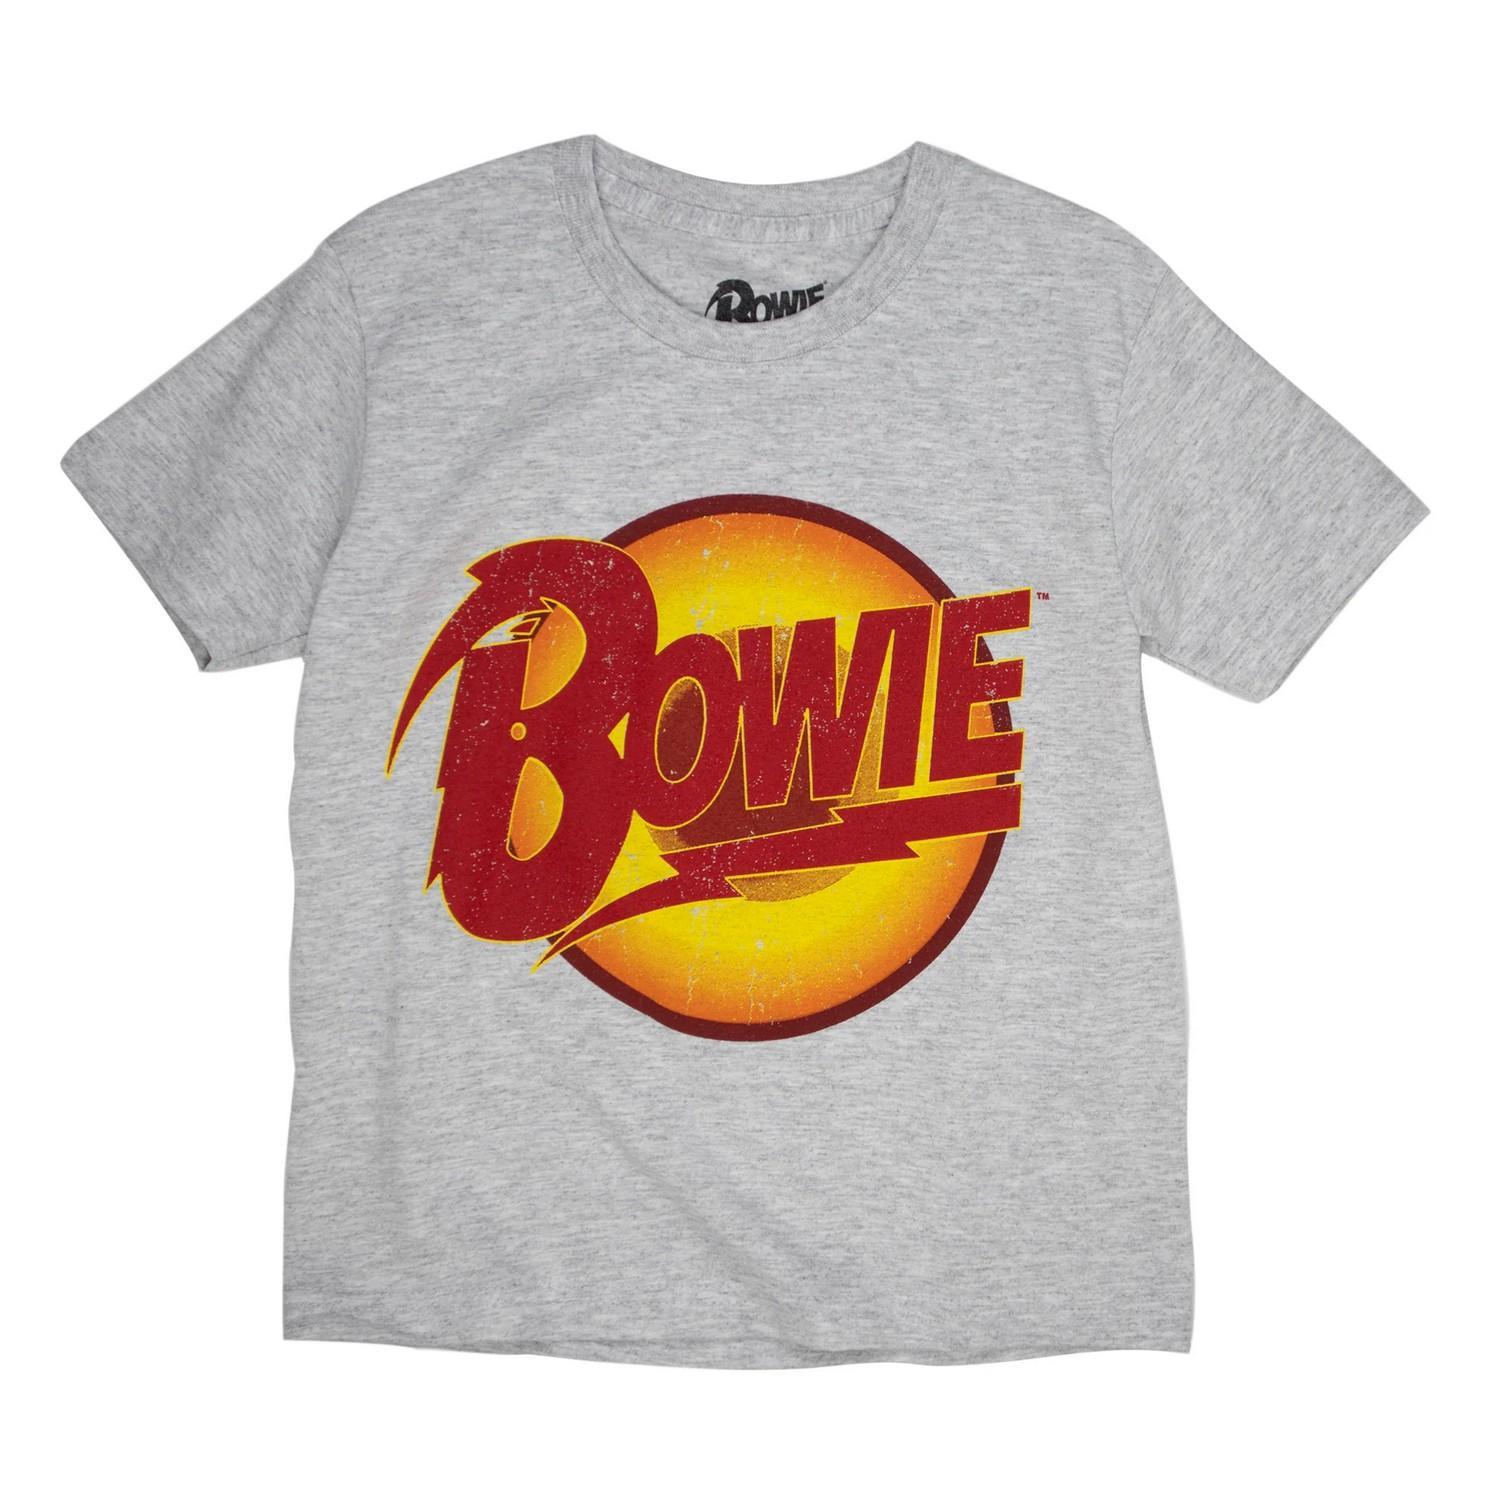 David Bowie Childrens/Kids Diamond Dogs Vintage Logo T-Shirt (Heather Grey) (11-12 Years)